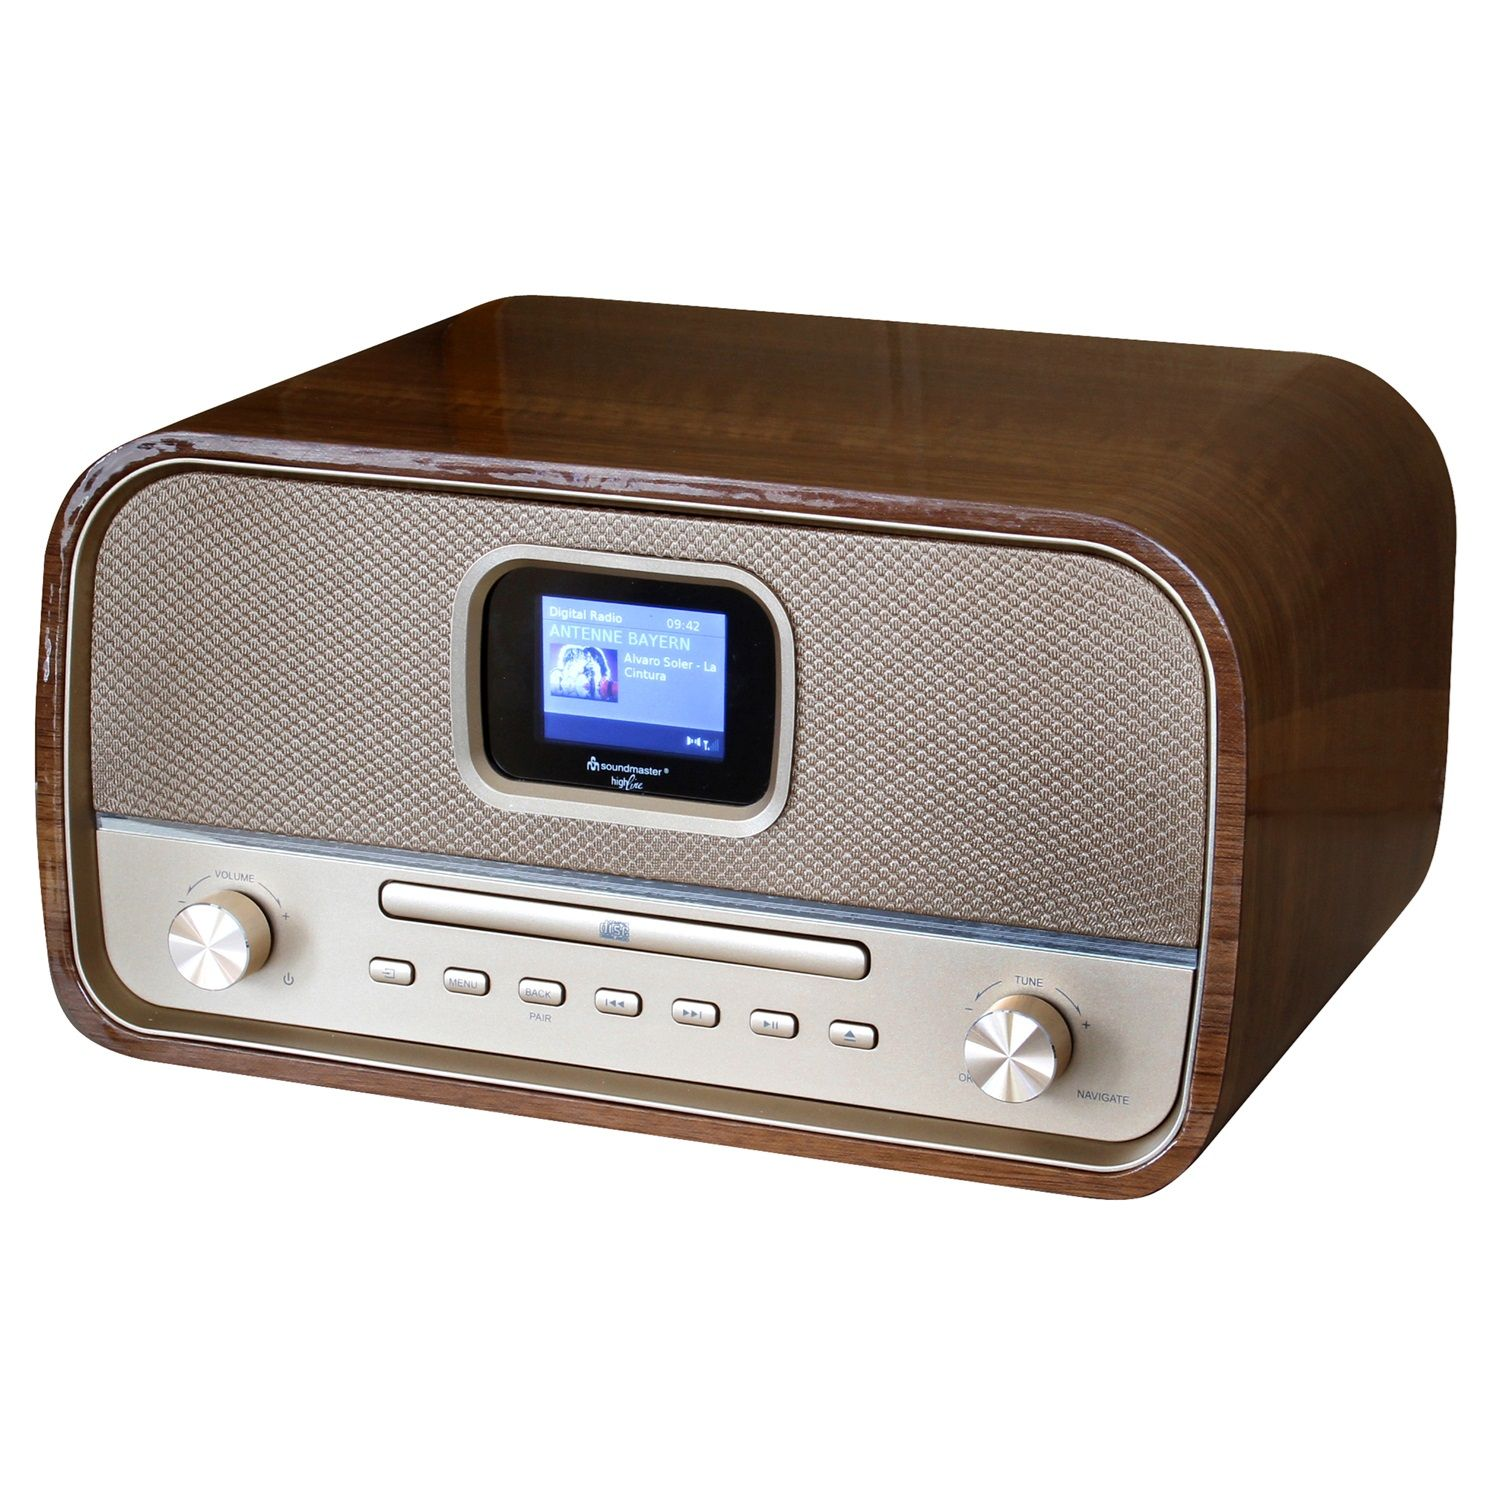 SOUNDMASTER DAB970BR1 Multifunktionsradio, DAB+, FM, Bluetooth, AM, DAB+, FM, DAB, holzoptik